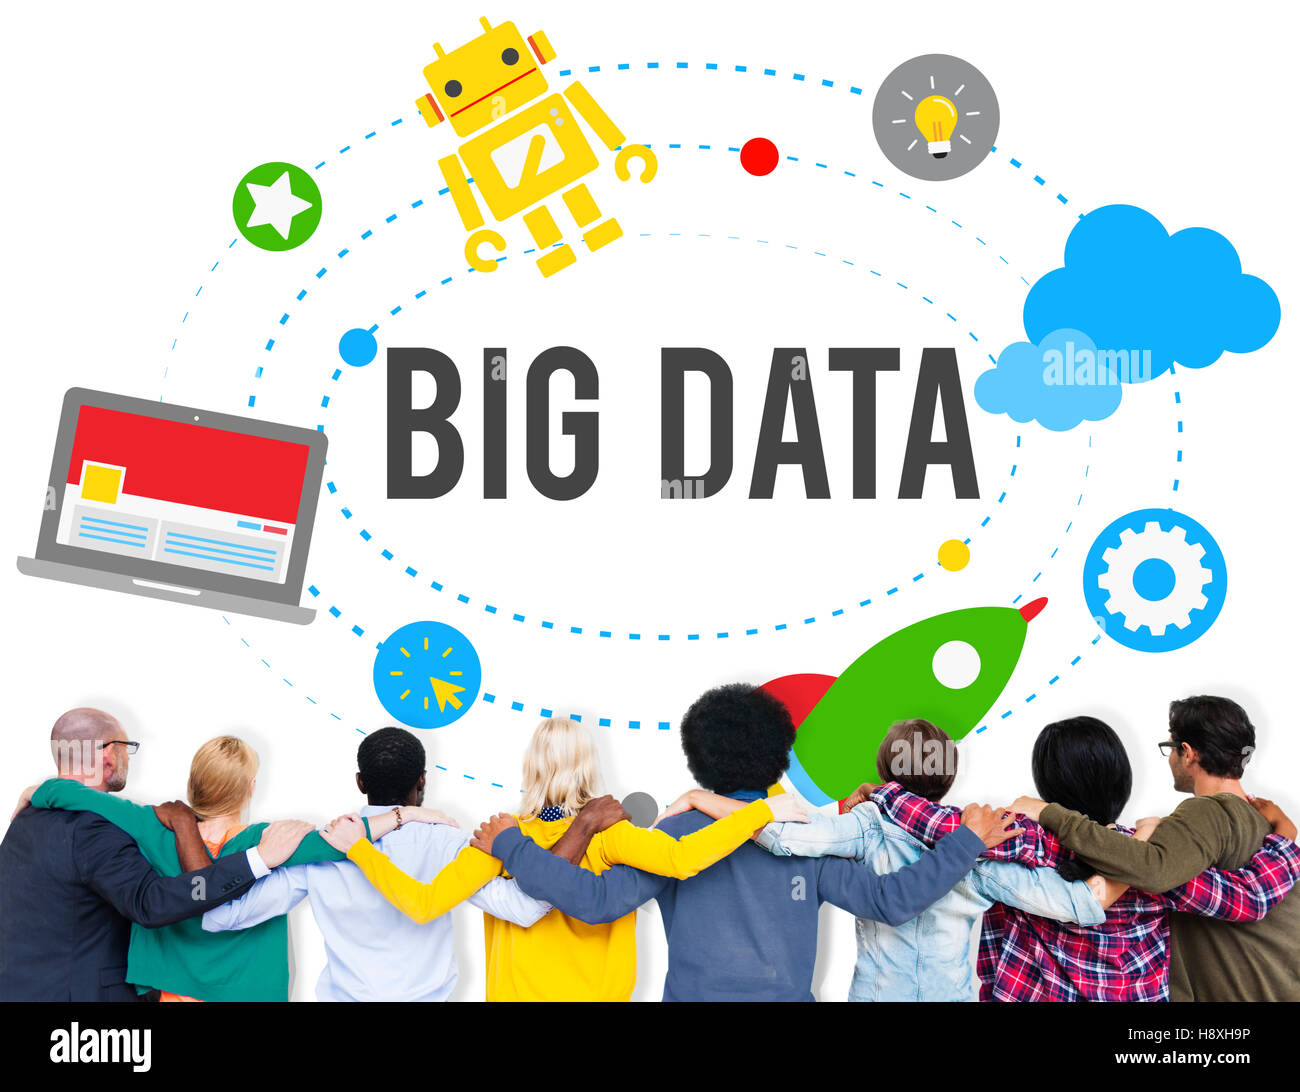 Big Data Database Storage Analysis Security Concept Stock Photo